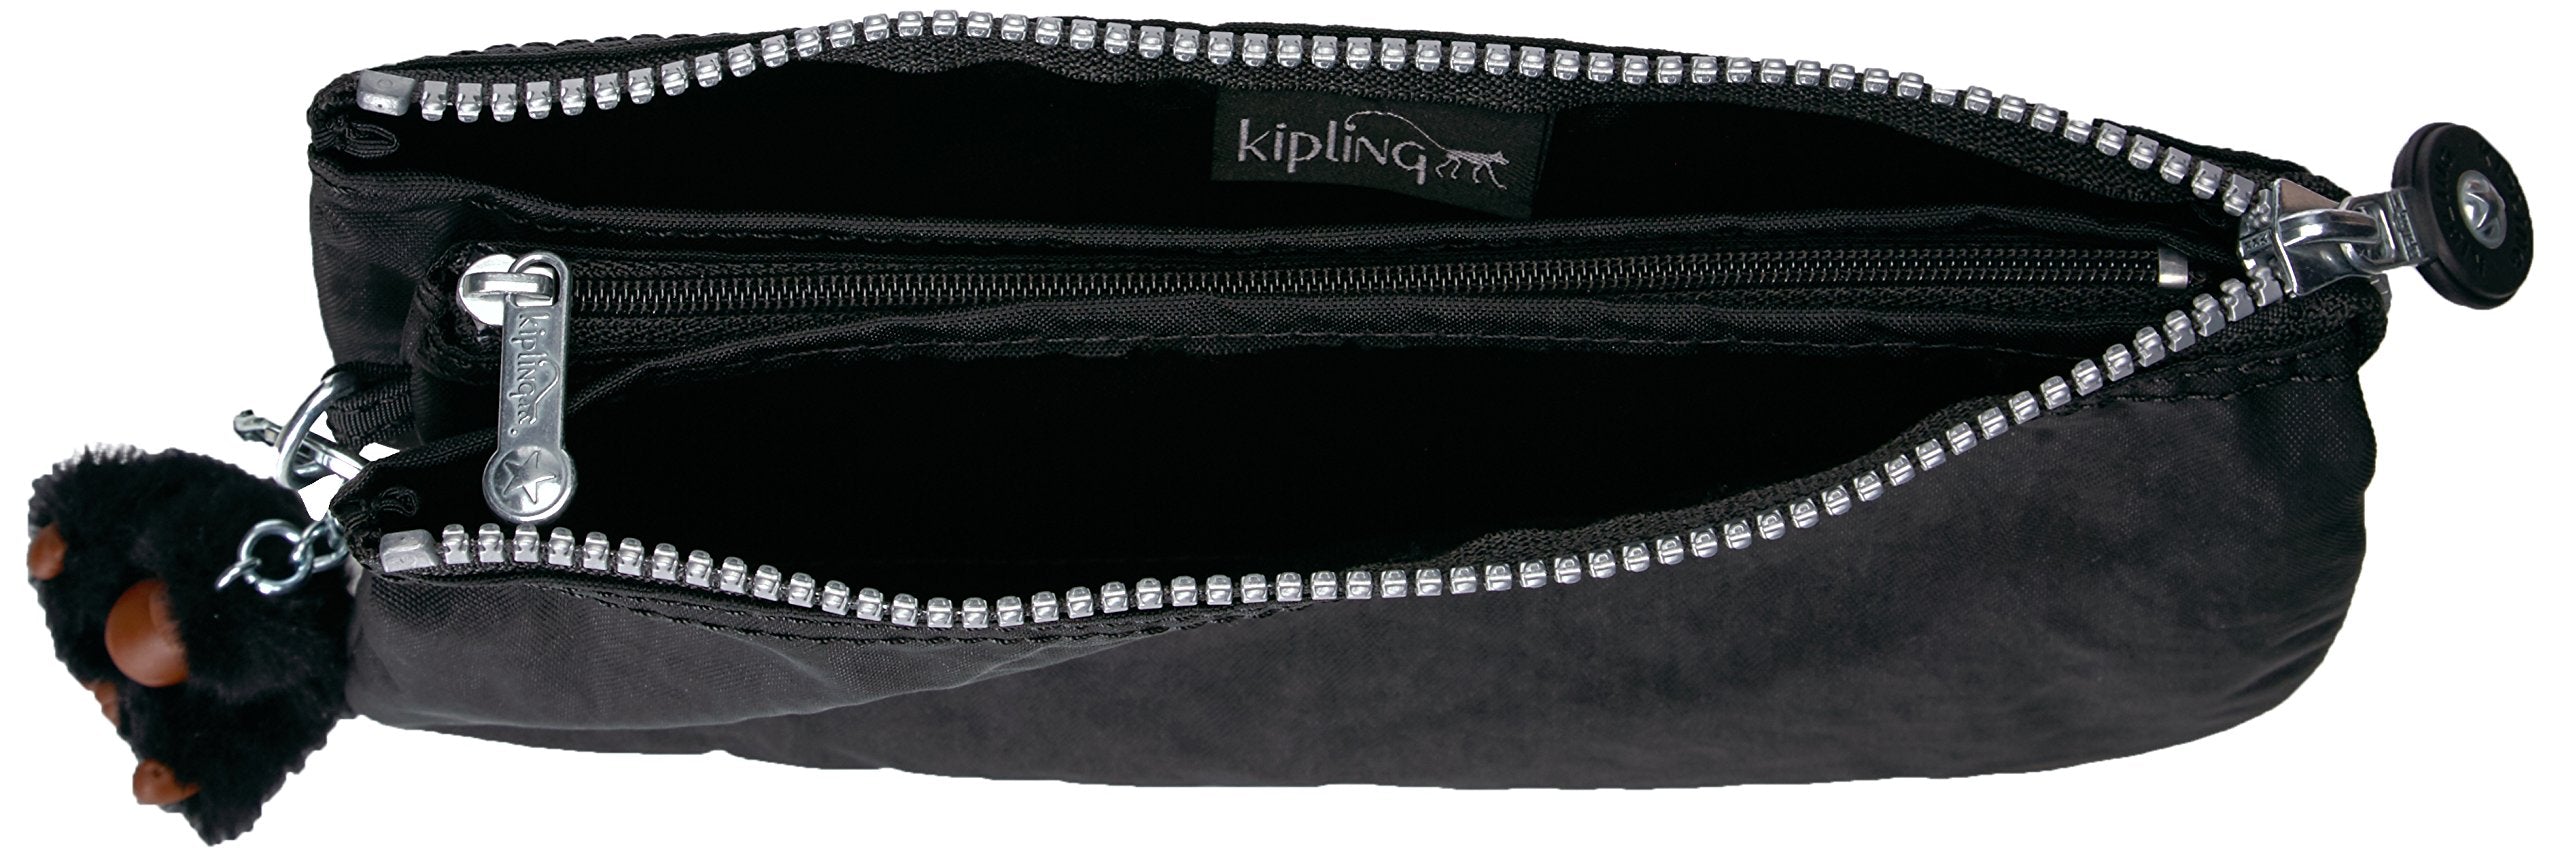 Kipling Creativity Large Pouch in Black